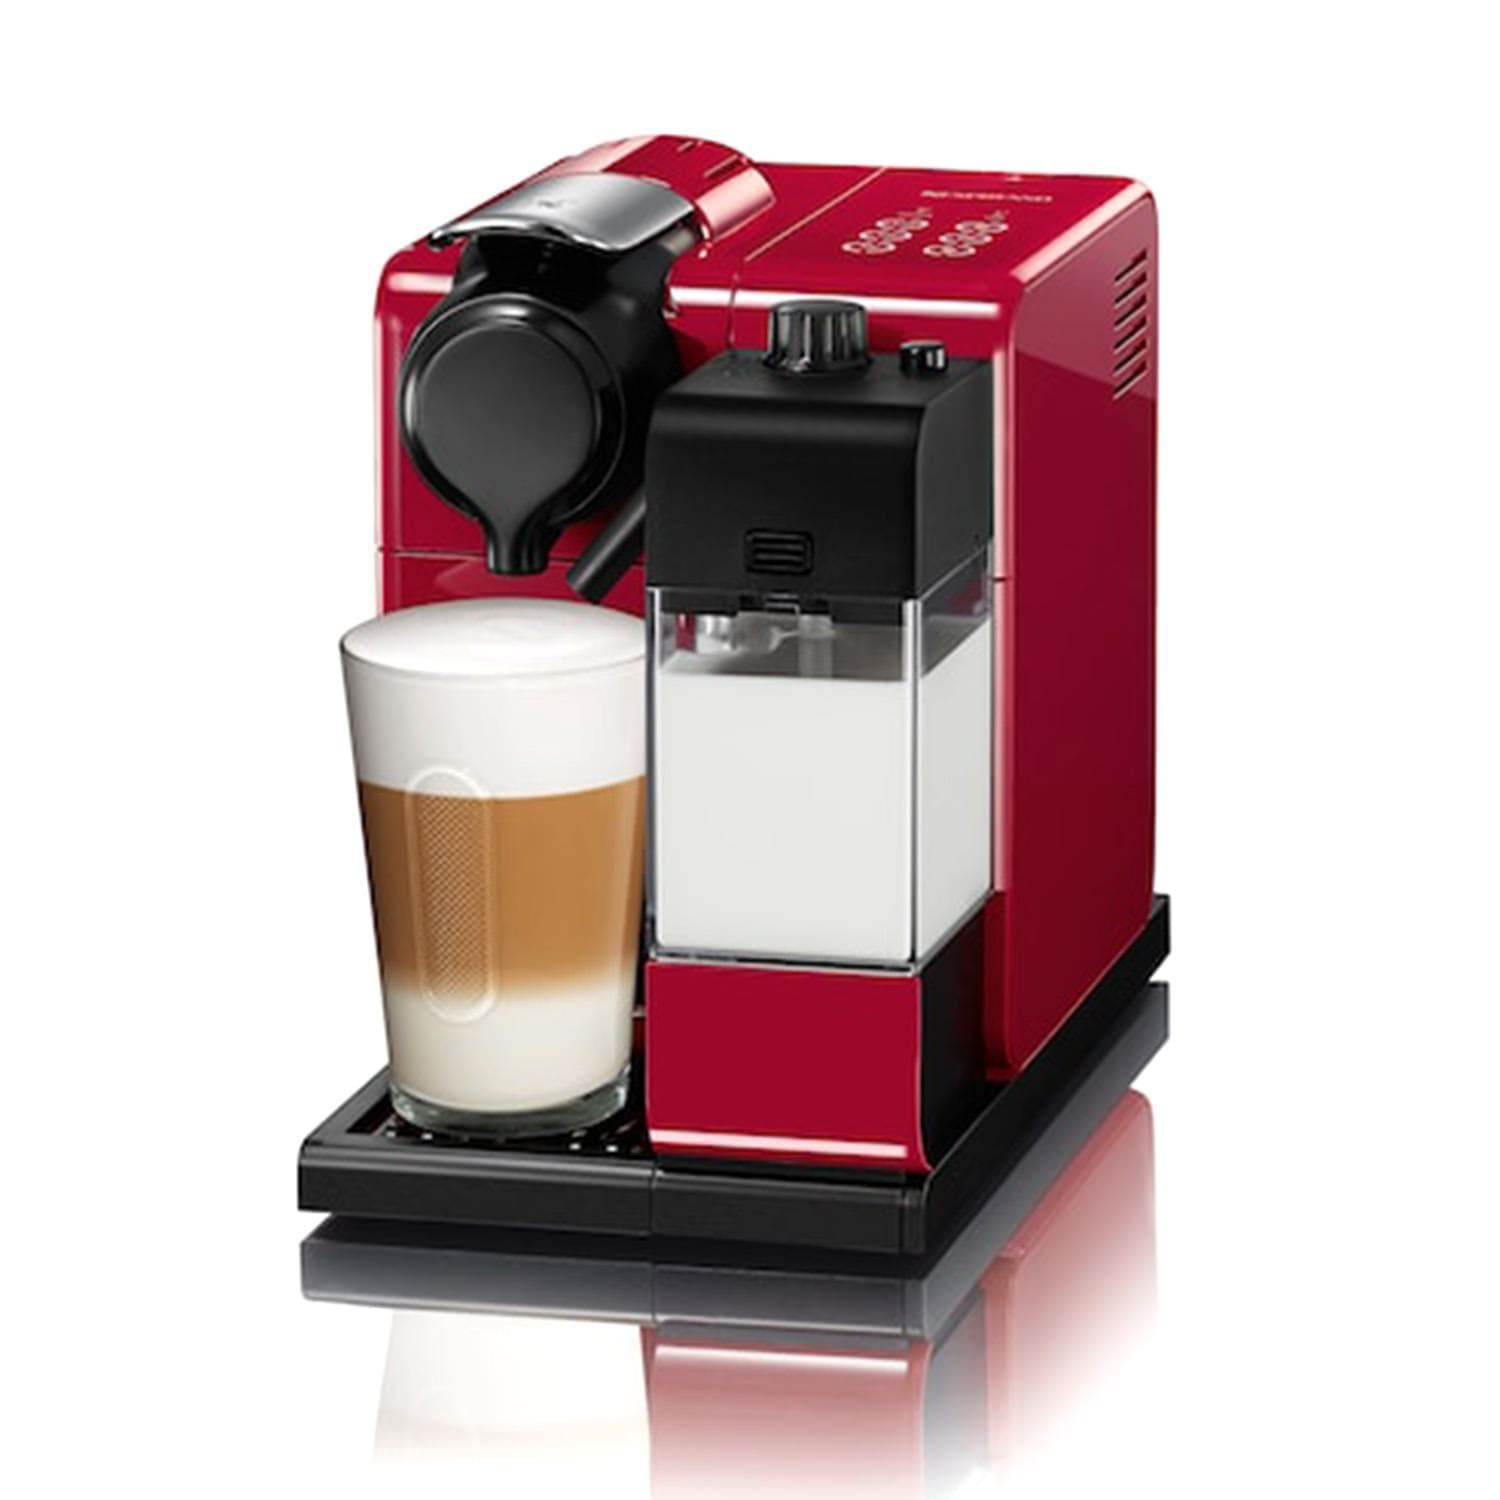 Nespresso ماكينة صنع القهوة لاتيسيما تاتش - احمر - F511-ME-RE-NE - جاشنمال هوم